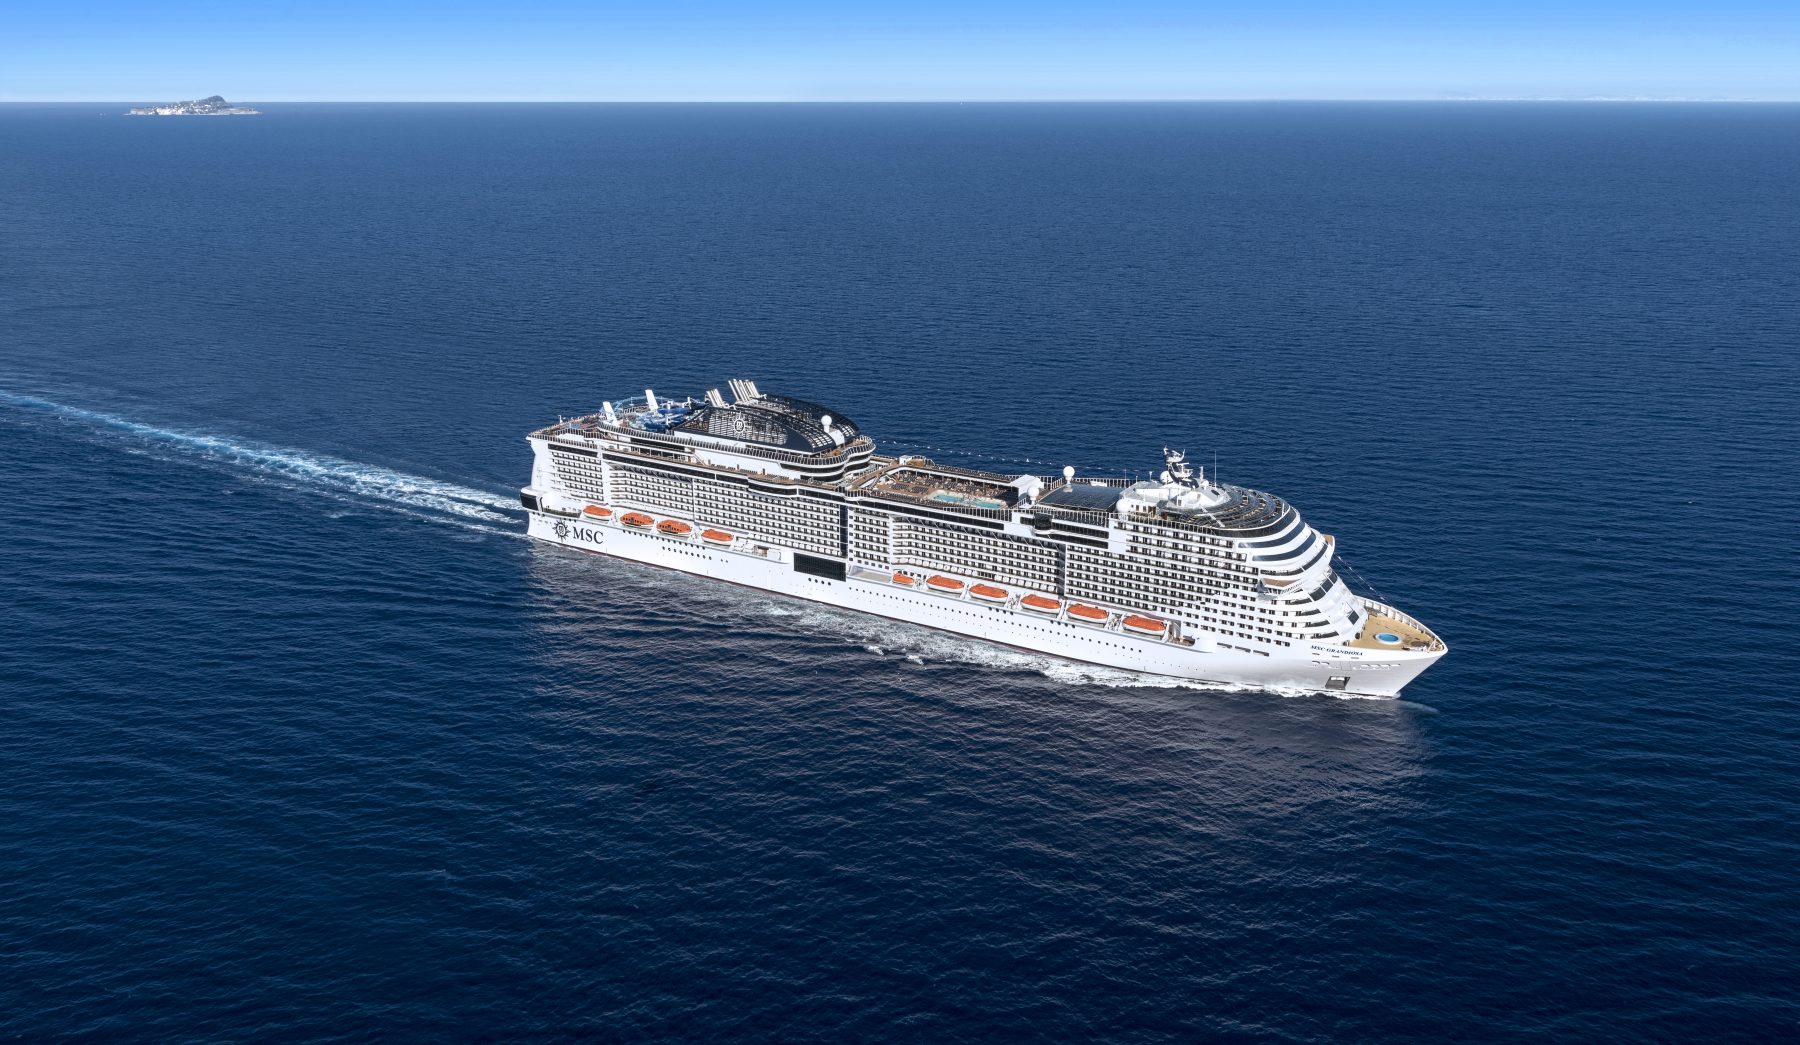 MSC Cruises floats out its latest ship, the MSC Grandiosa